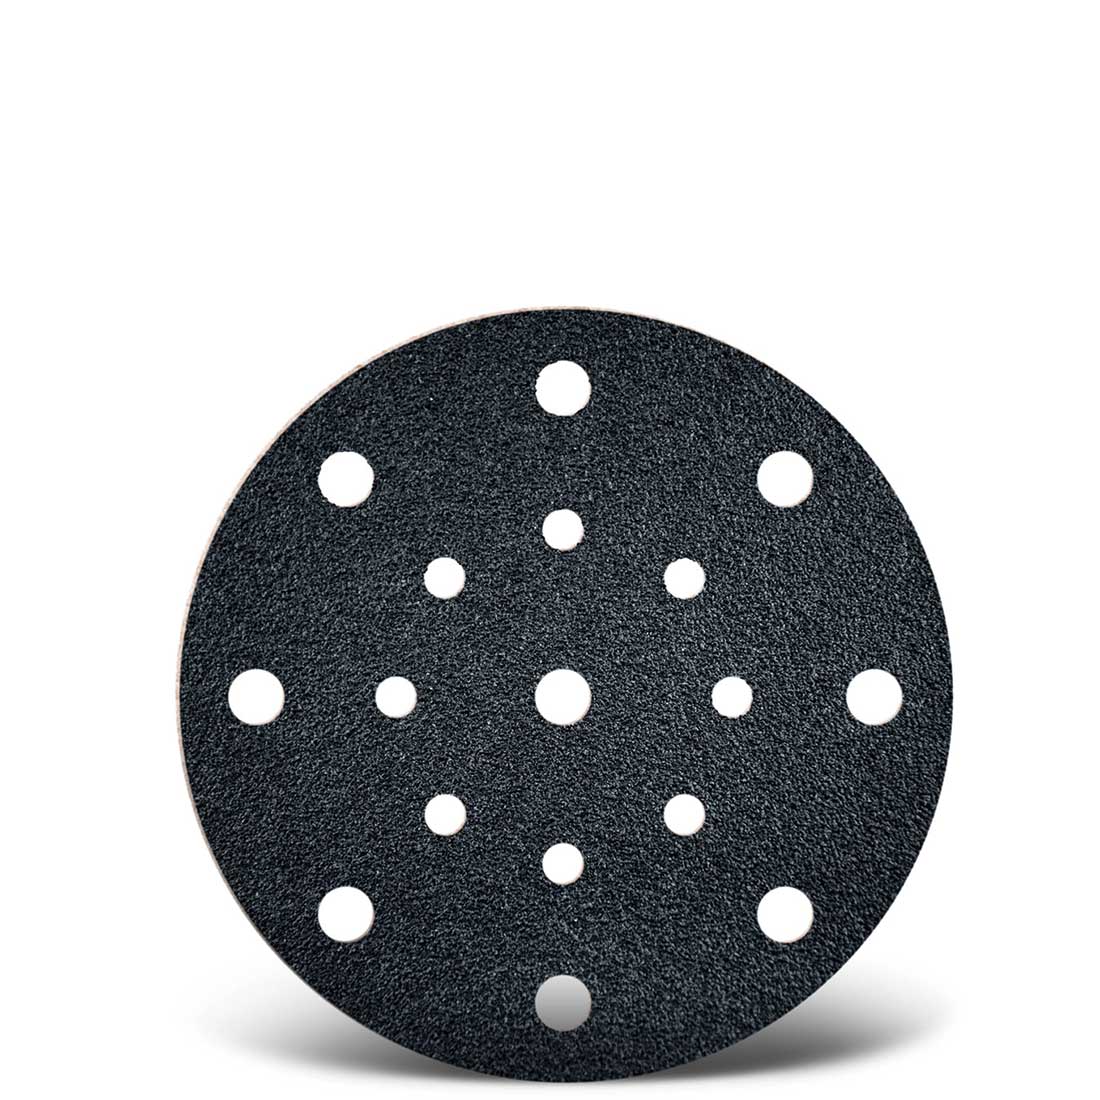 MENZER hook & loop sanding discs for random orbital sanders, G24–800, Ø 150 mm / 17 hole / silicon carbide